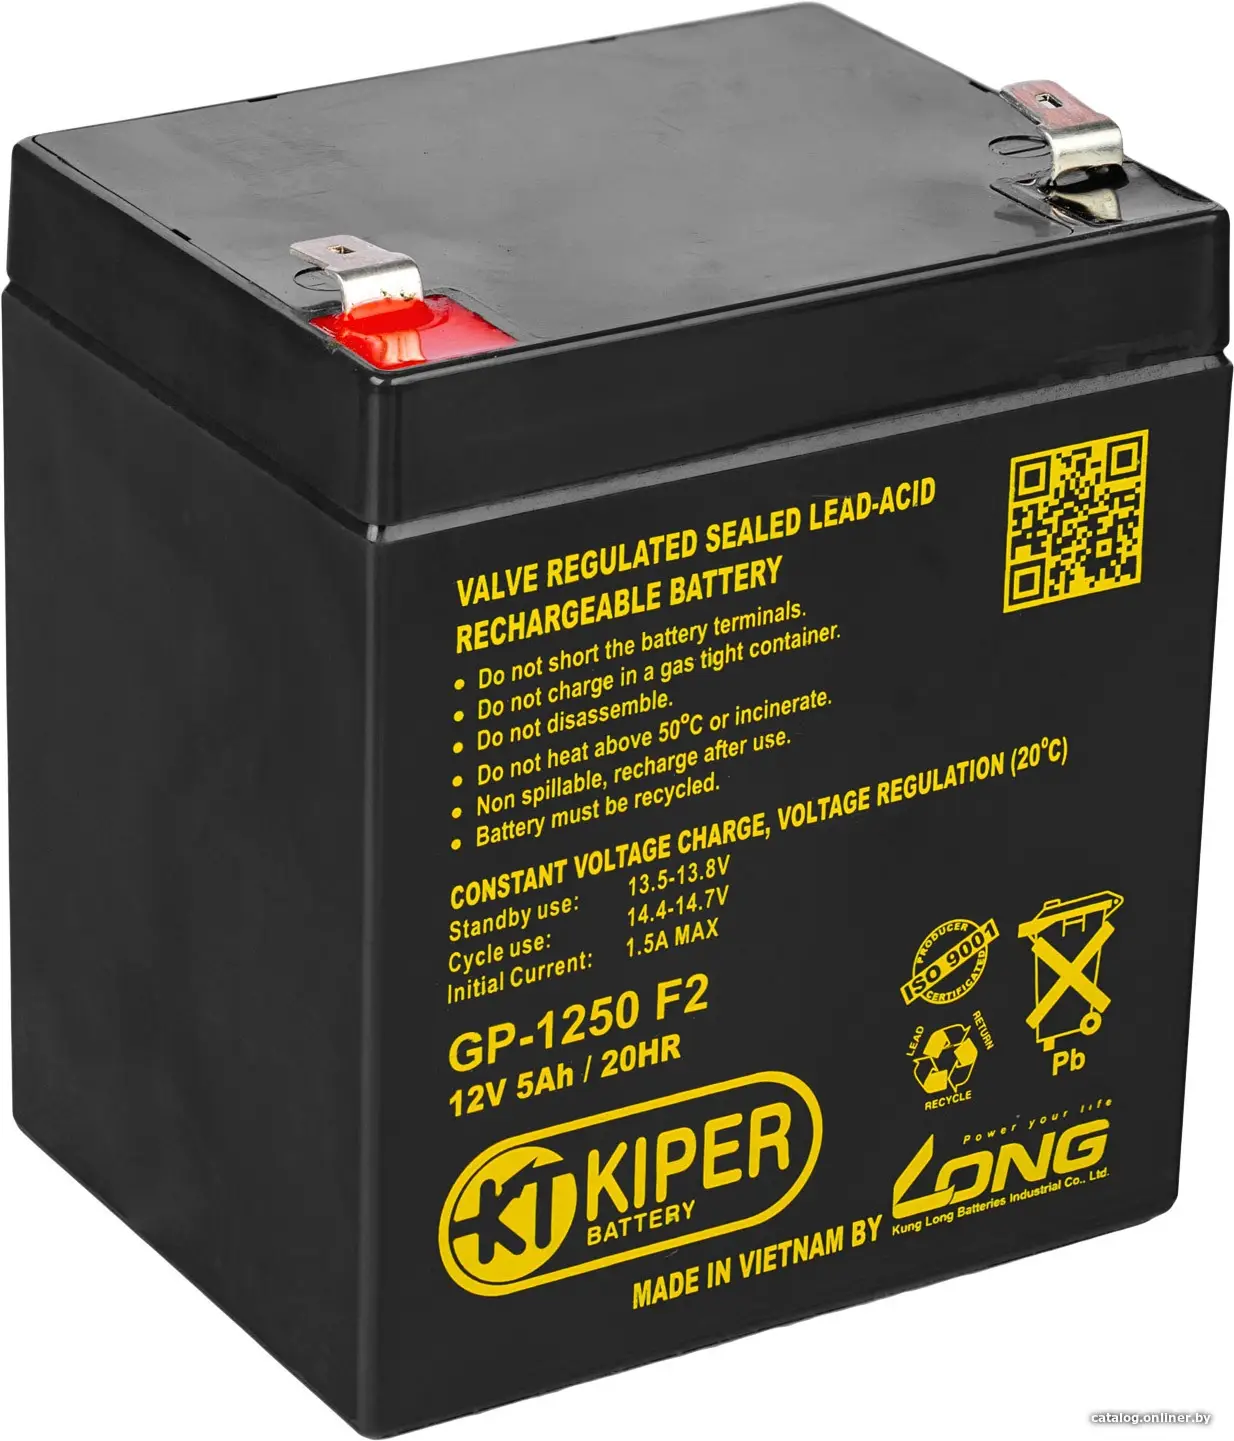 Купить Аккумуляторная батарея Kiper GP-1250 F2 12V/5Ah, цена, опт и розница